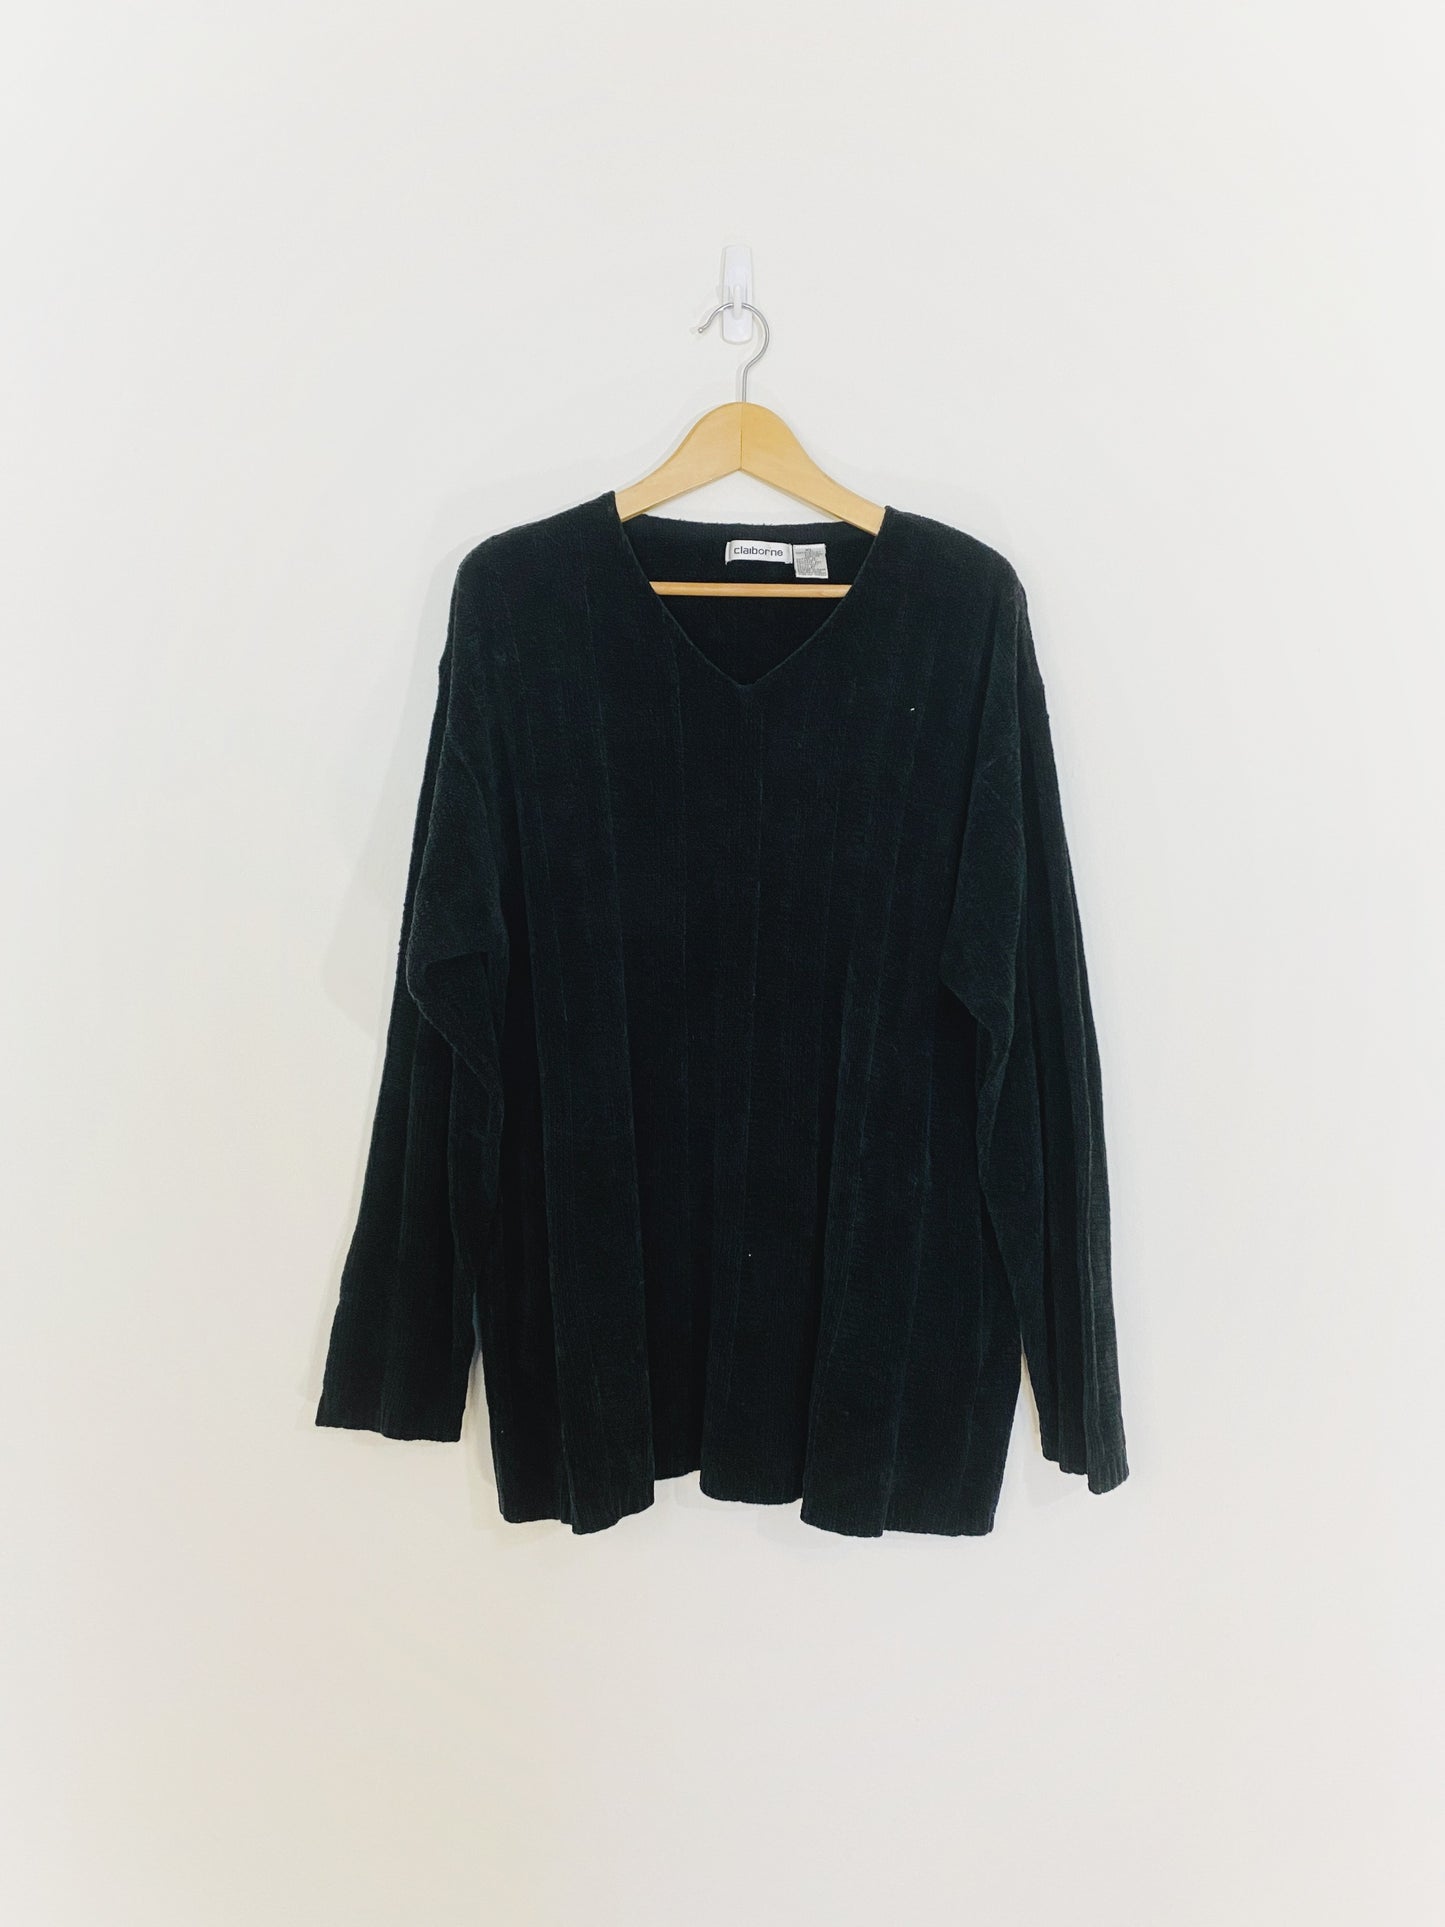 Black Velvety Sweater (XL)